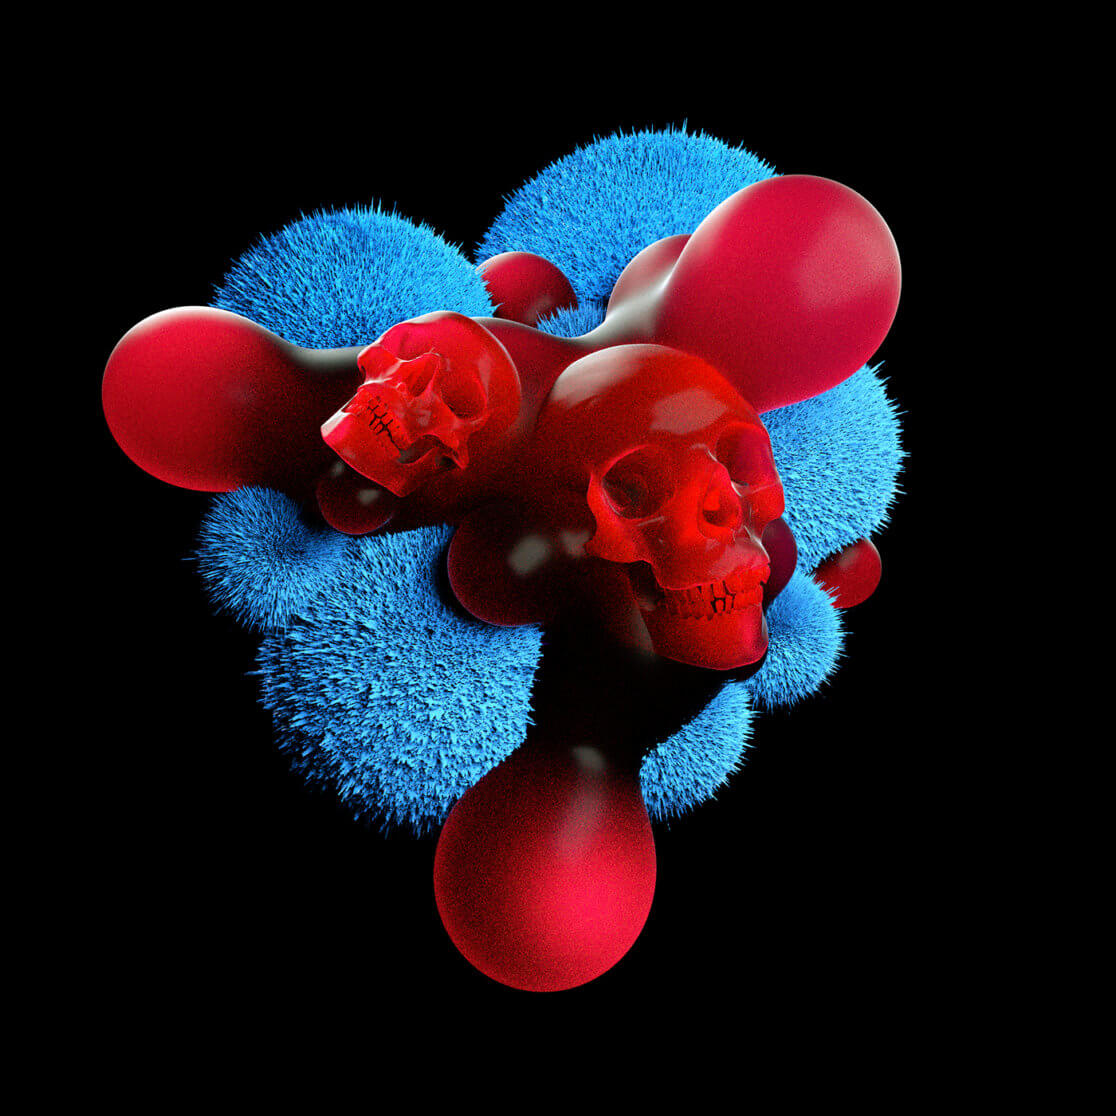 Black background. Red skull on blue, fuzzy balls. SAE student work by designer Mitchell Viney